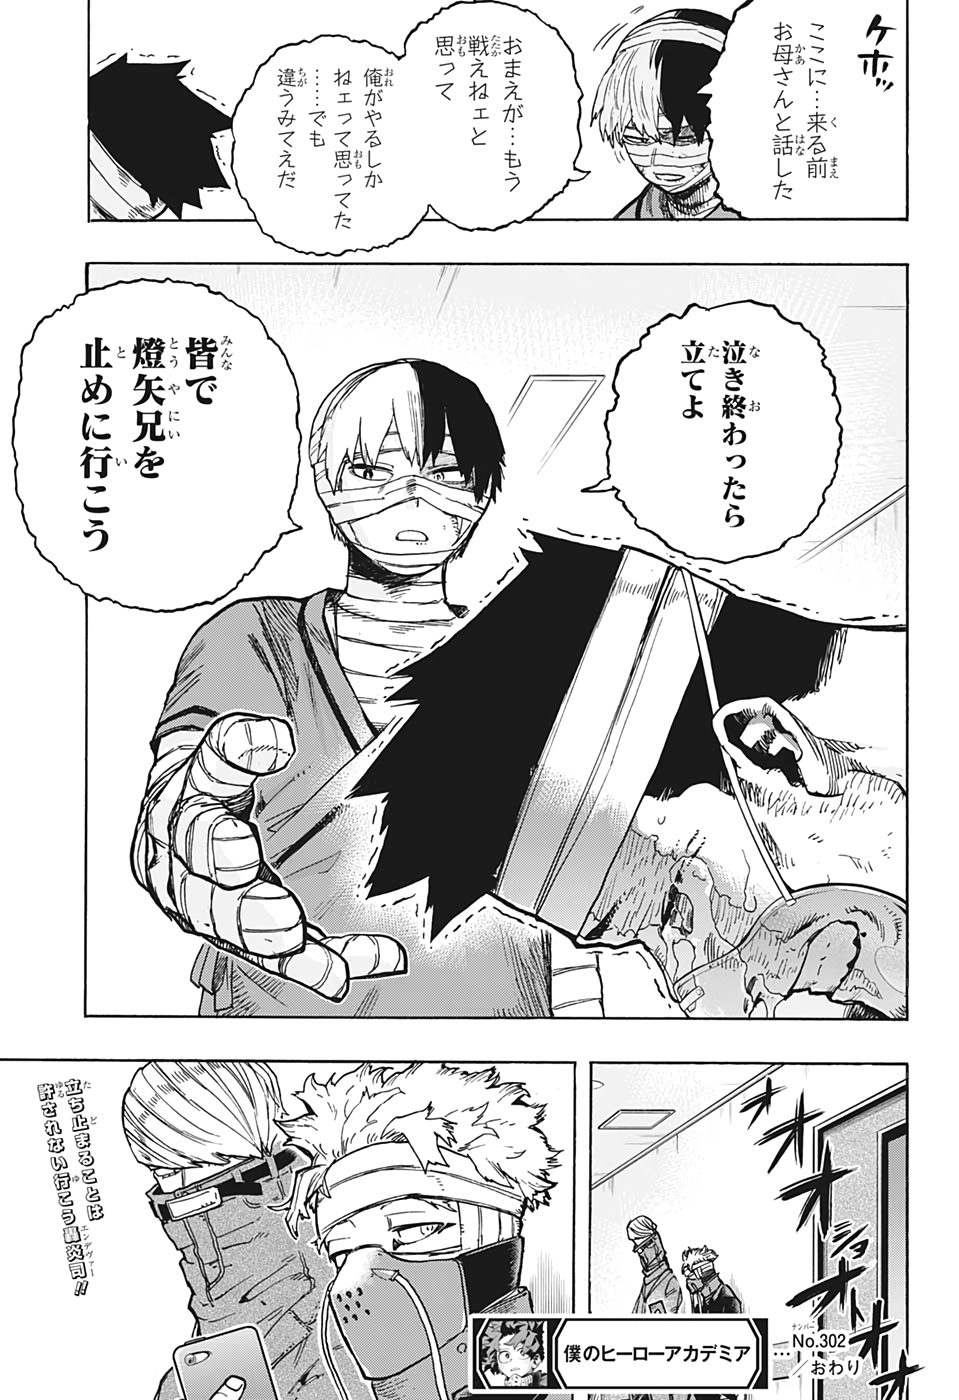 Boku no Hero Academia - Chapter 302 - Page 17